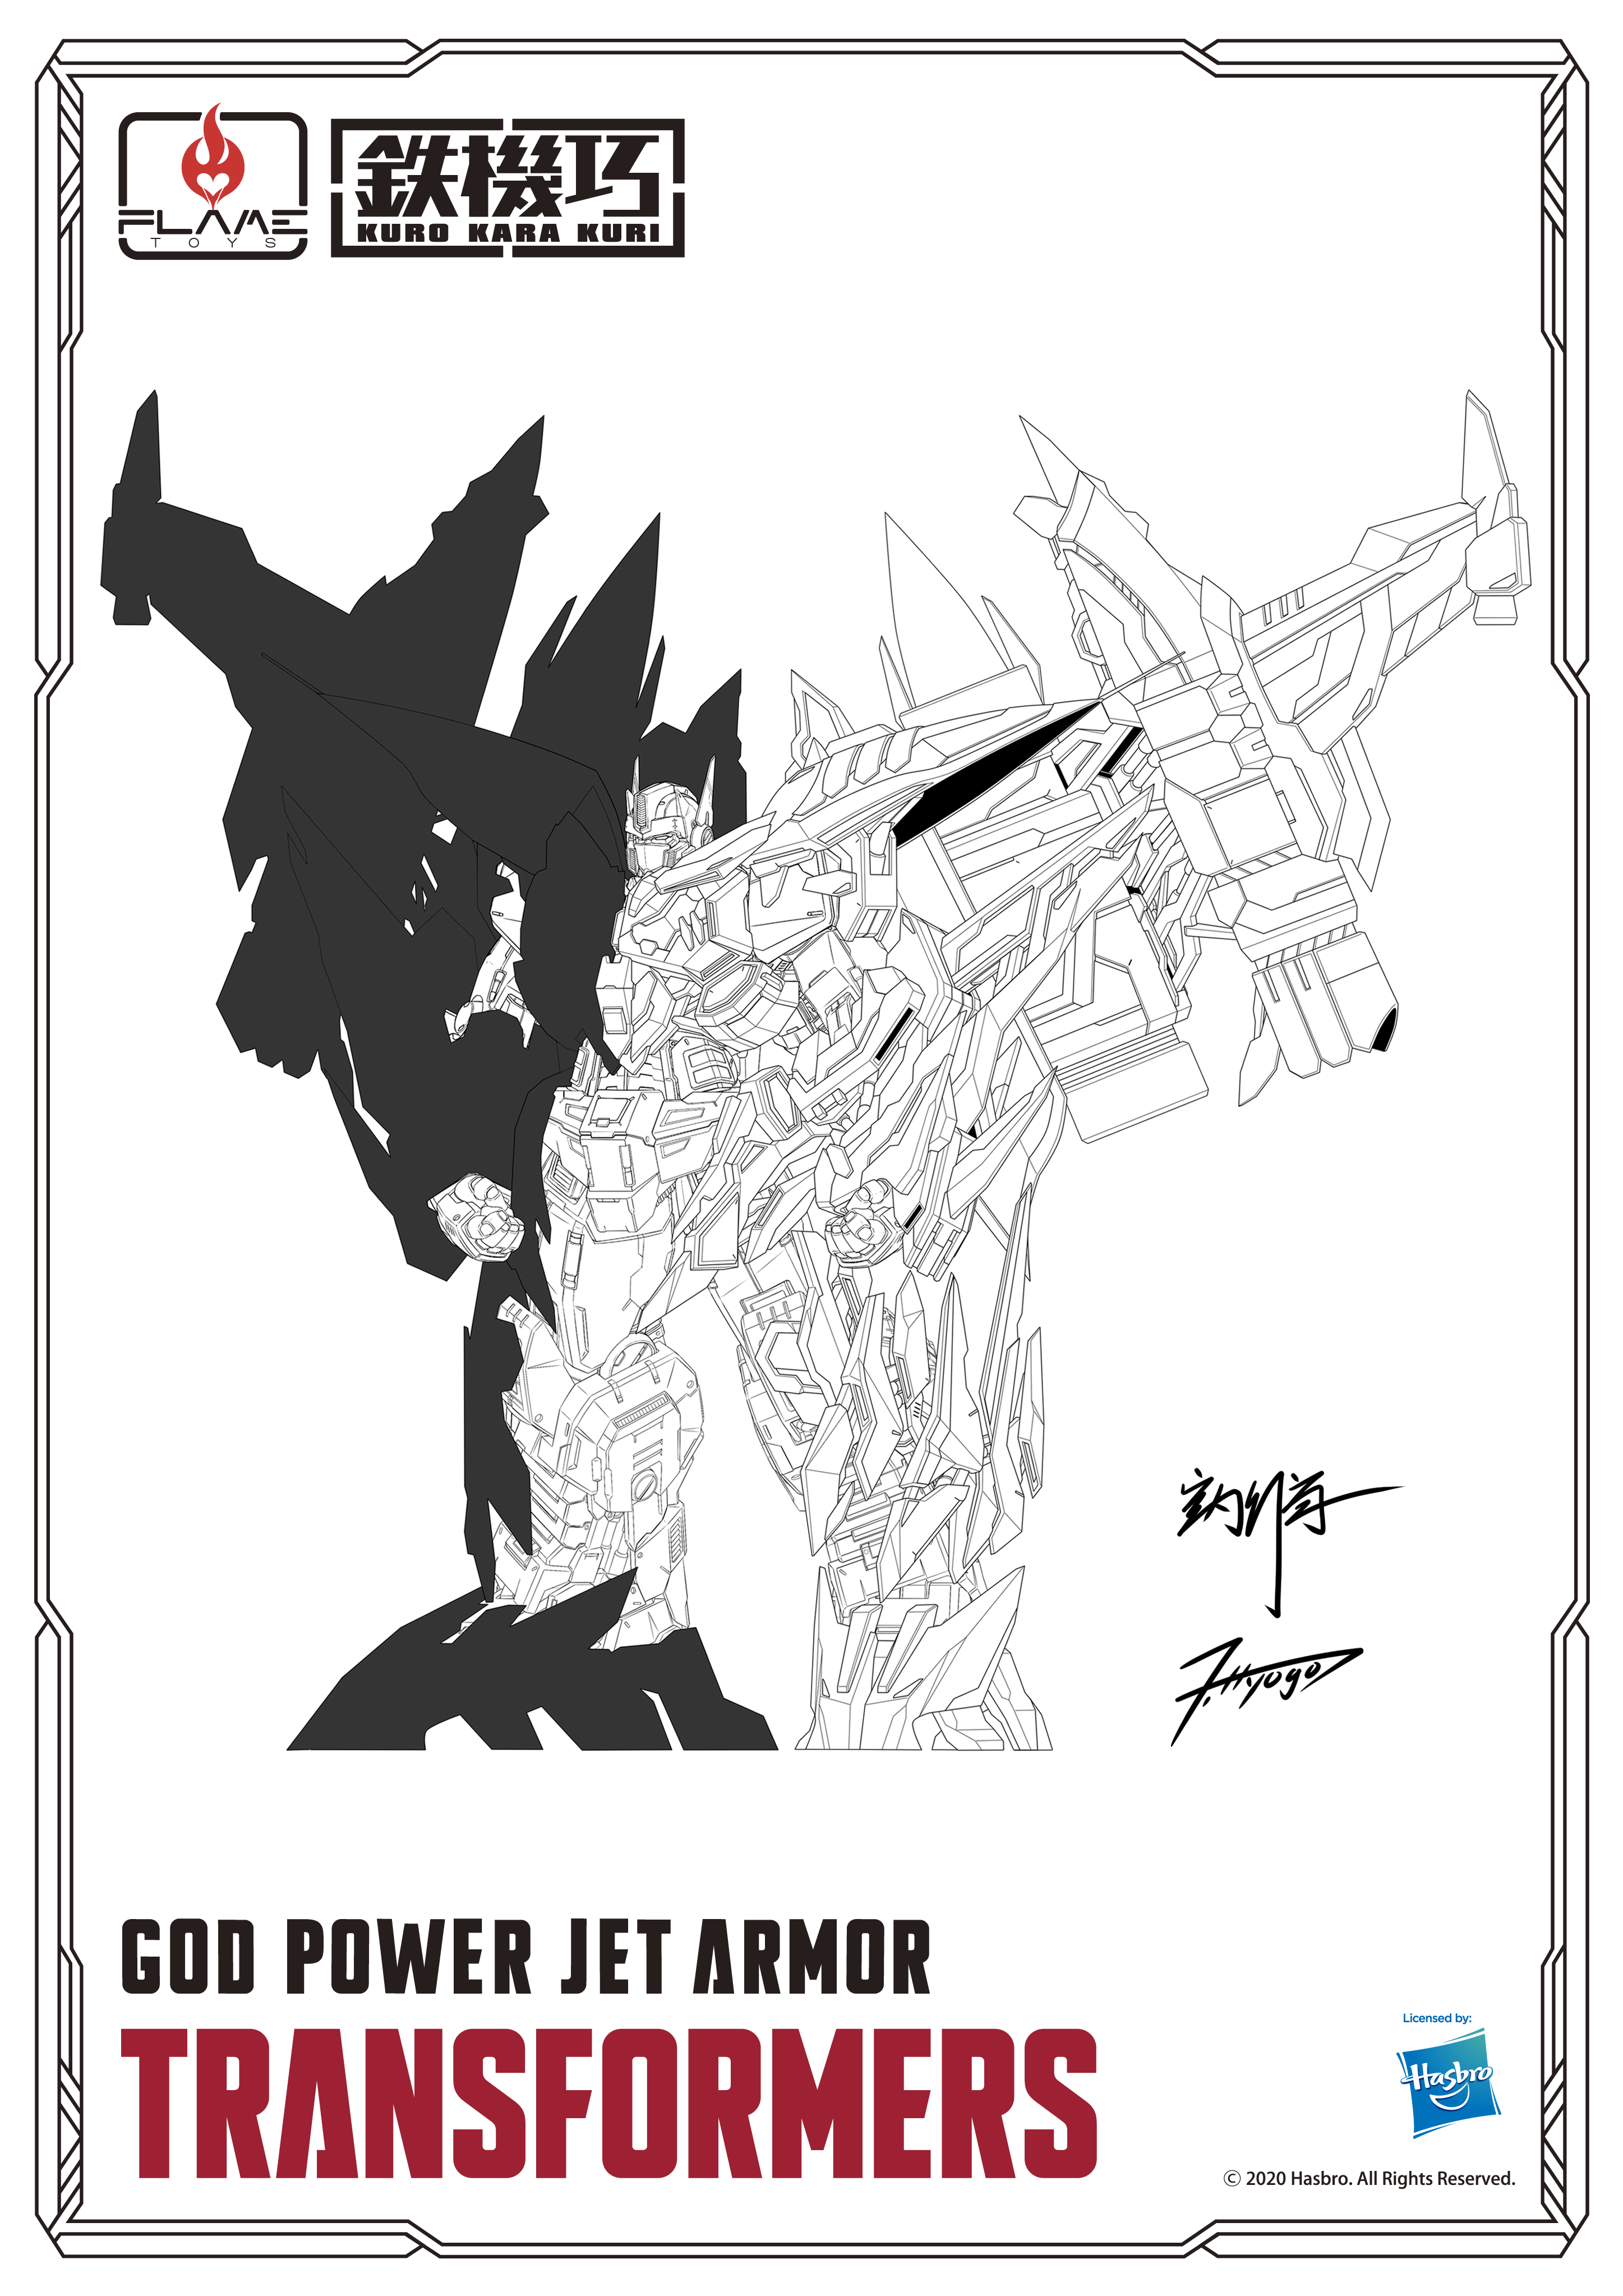 Transformers News: Flame Toys Announce Kuro Kara Kuri Jazz and God Power Jet Armour, Full Colour Victory Saber